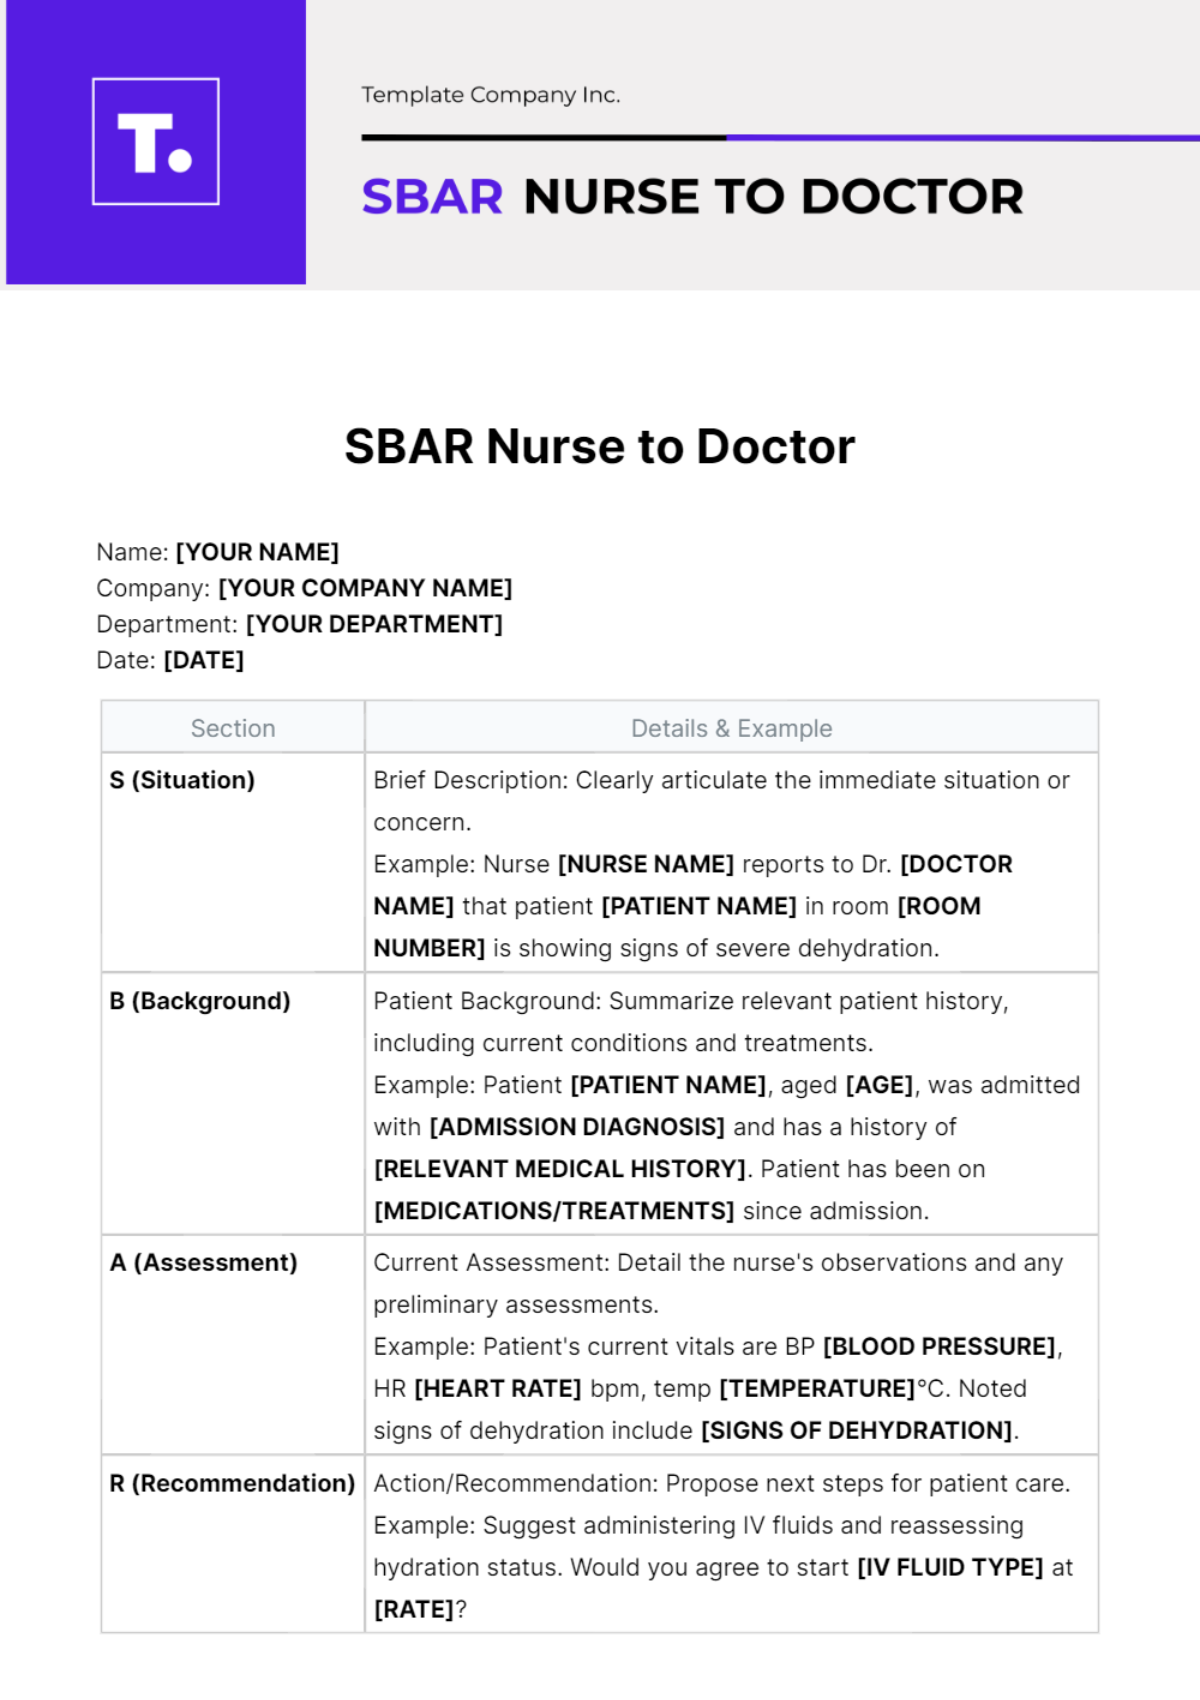 SBAR Nurse to Doctor Template